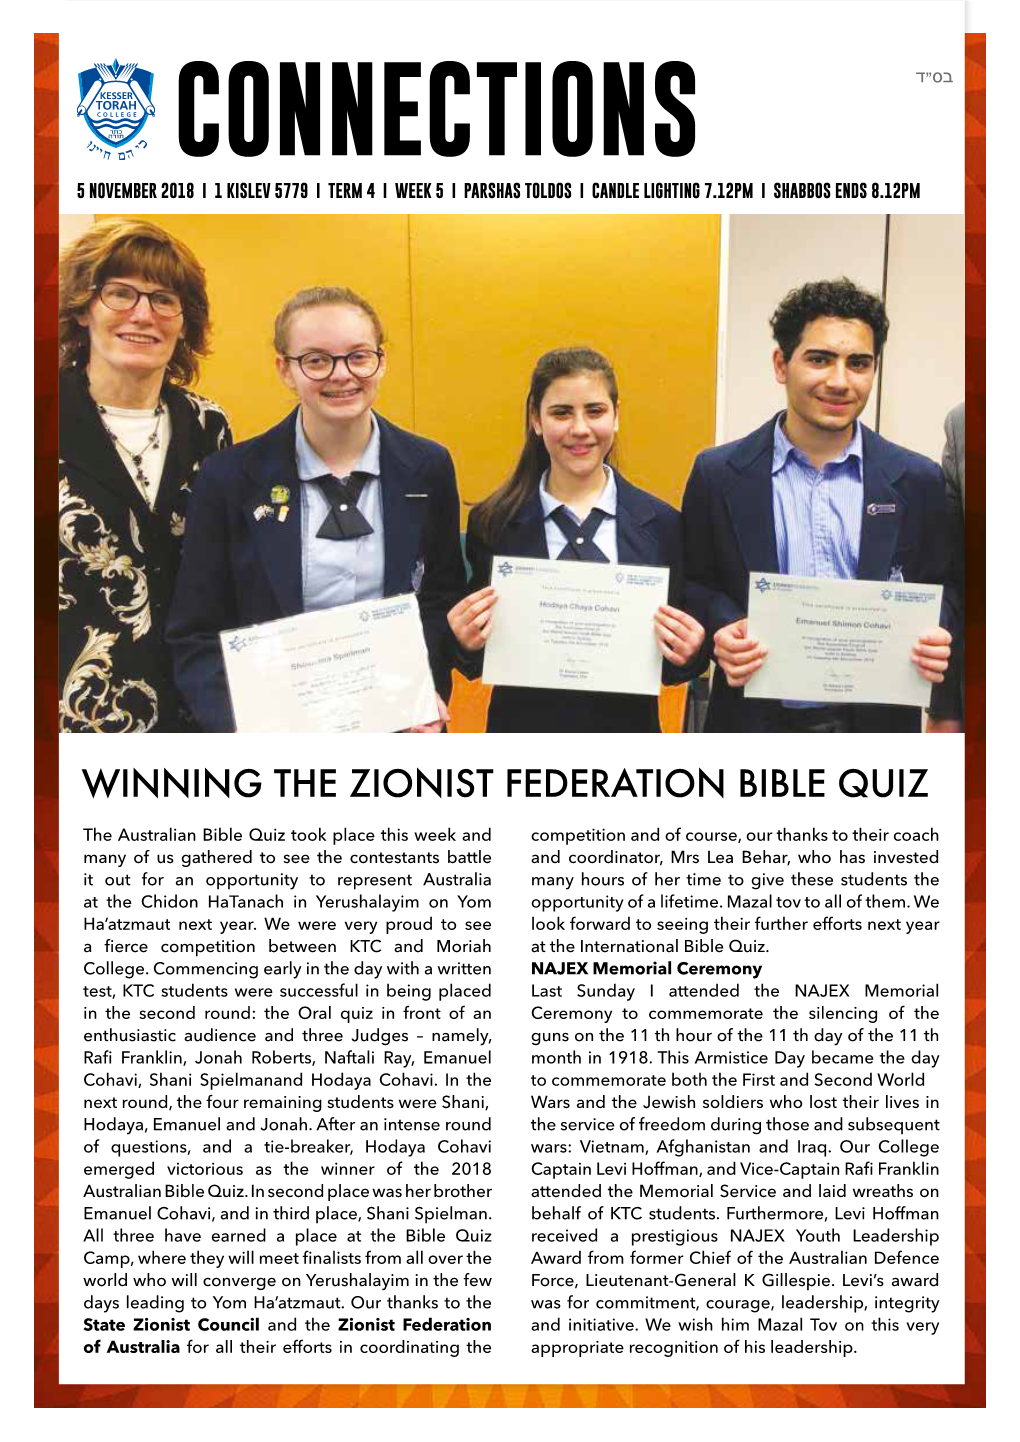 Winning the Zionist Federation Bible Quiz